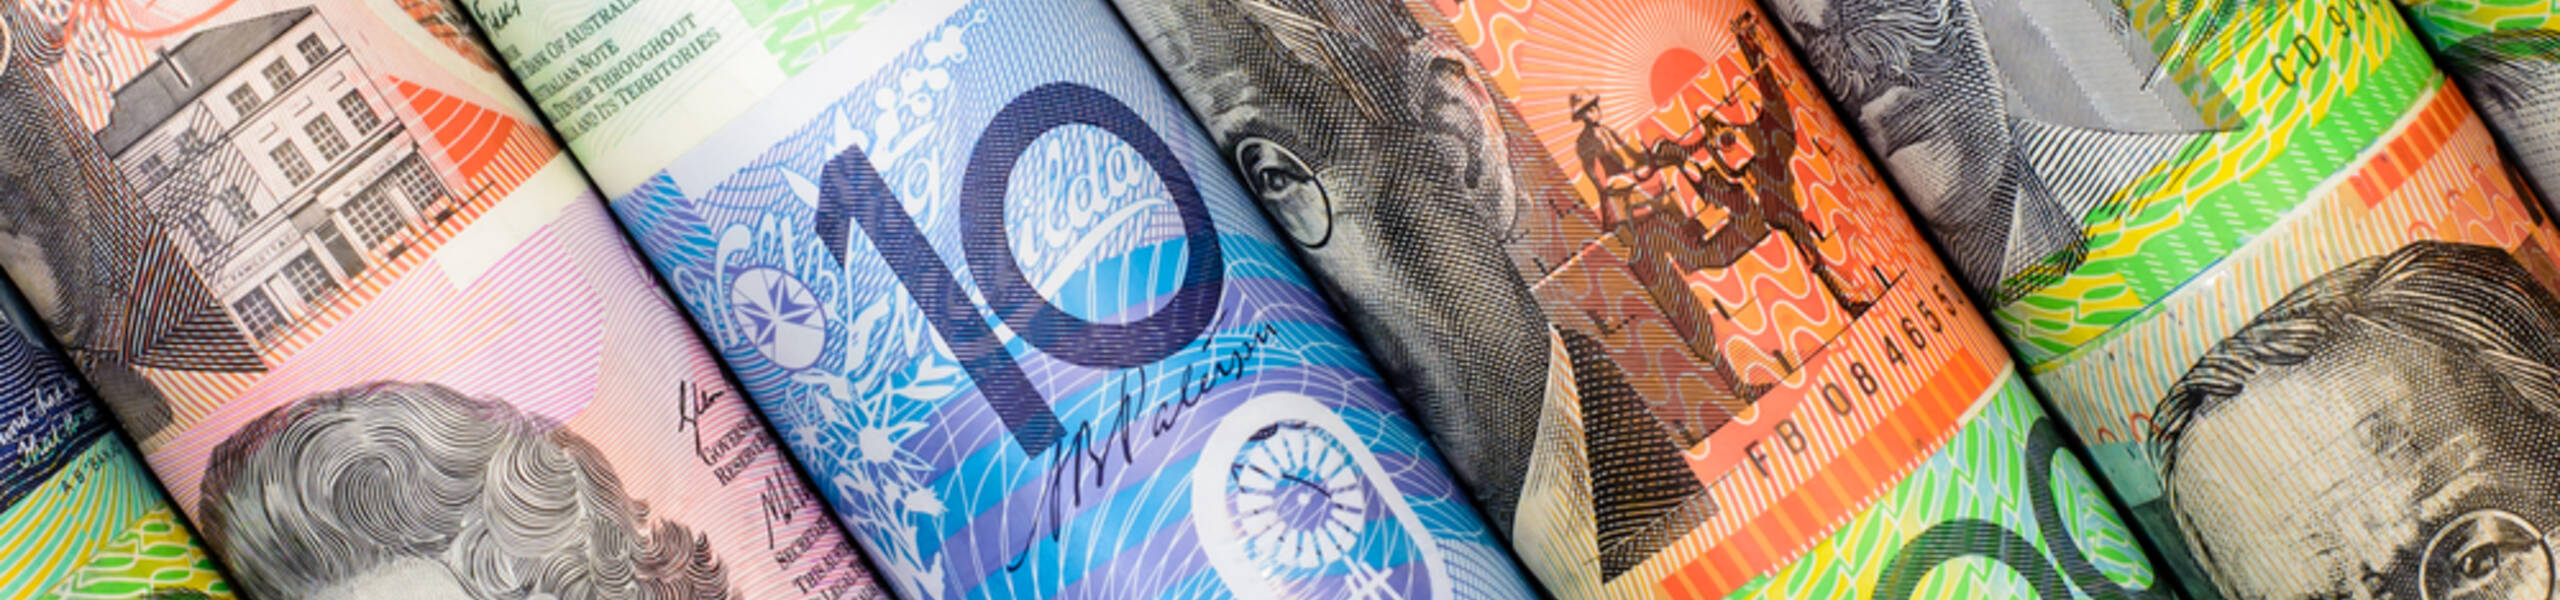 AUDUSD : Kelemahan US dollar mendorong kenaikan pasangan ini - 31-10-2019